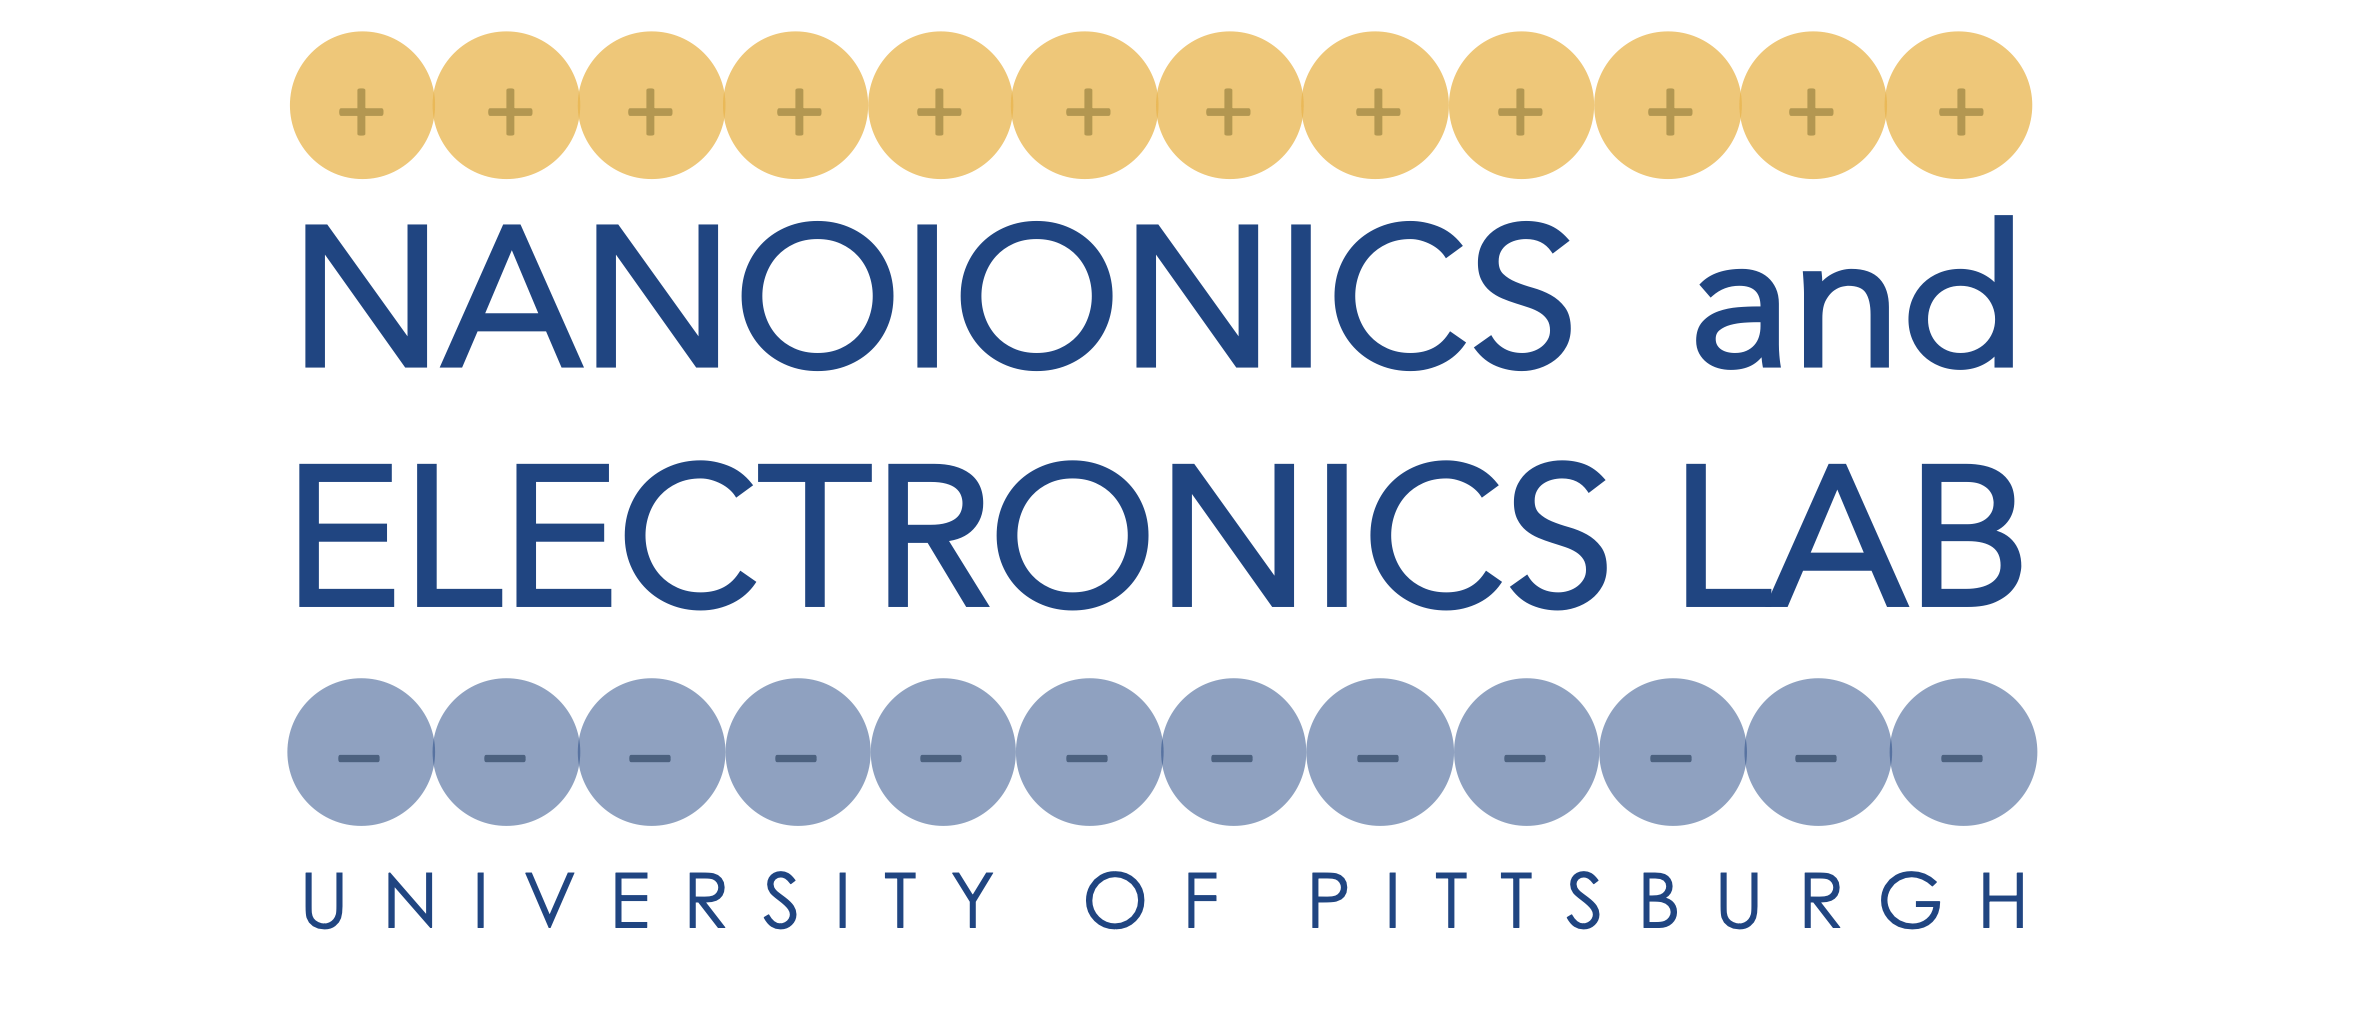 Lab logo - Nanoionics and electronics lab